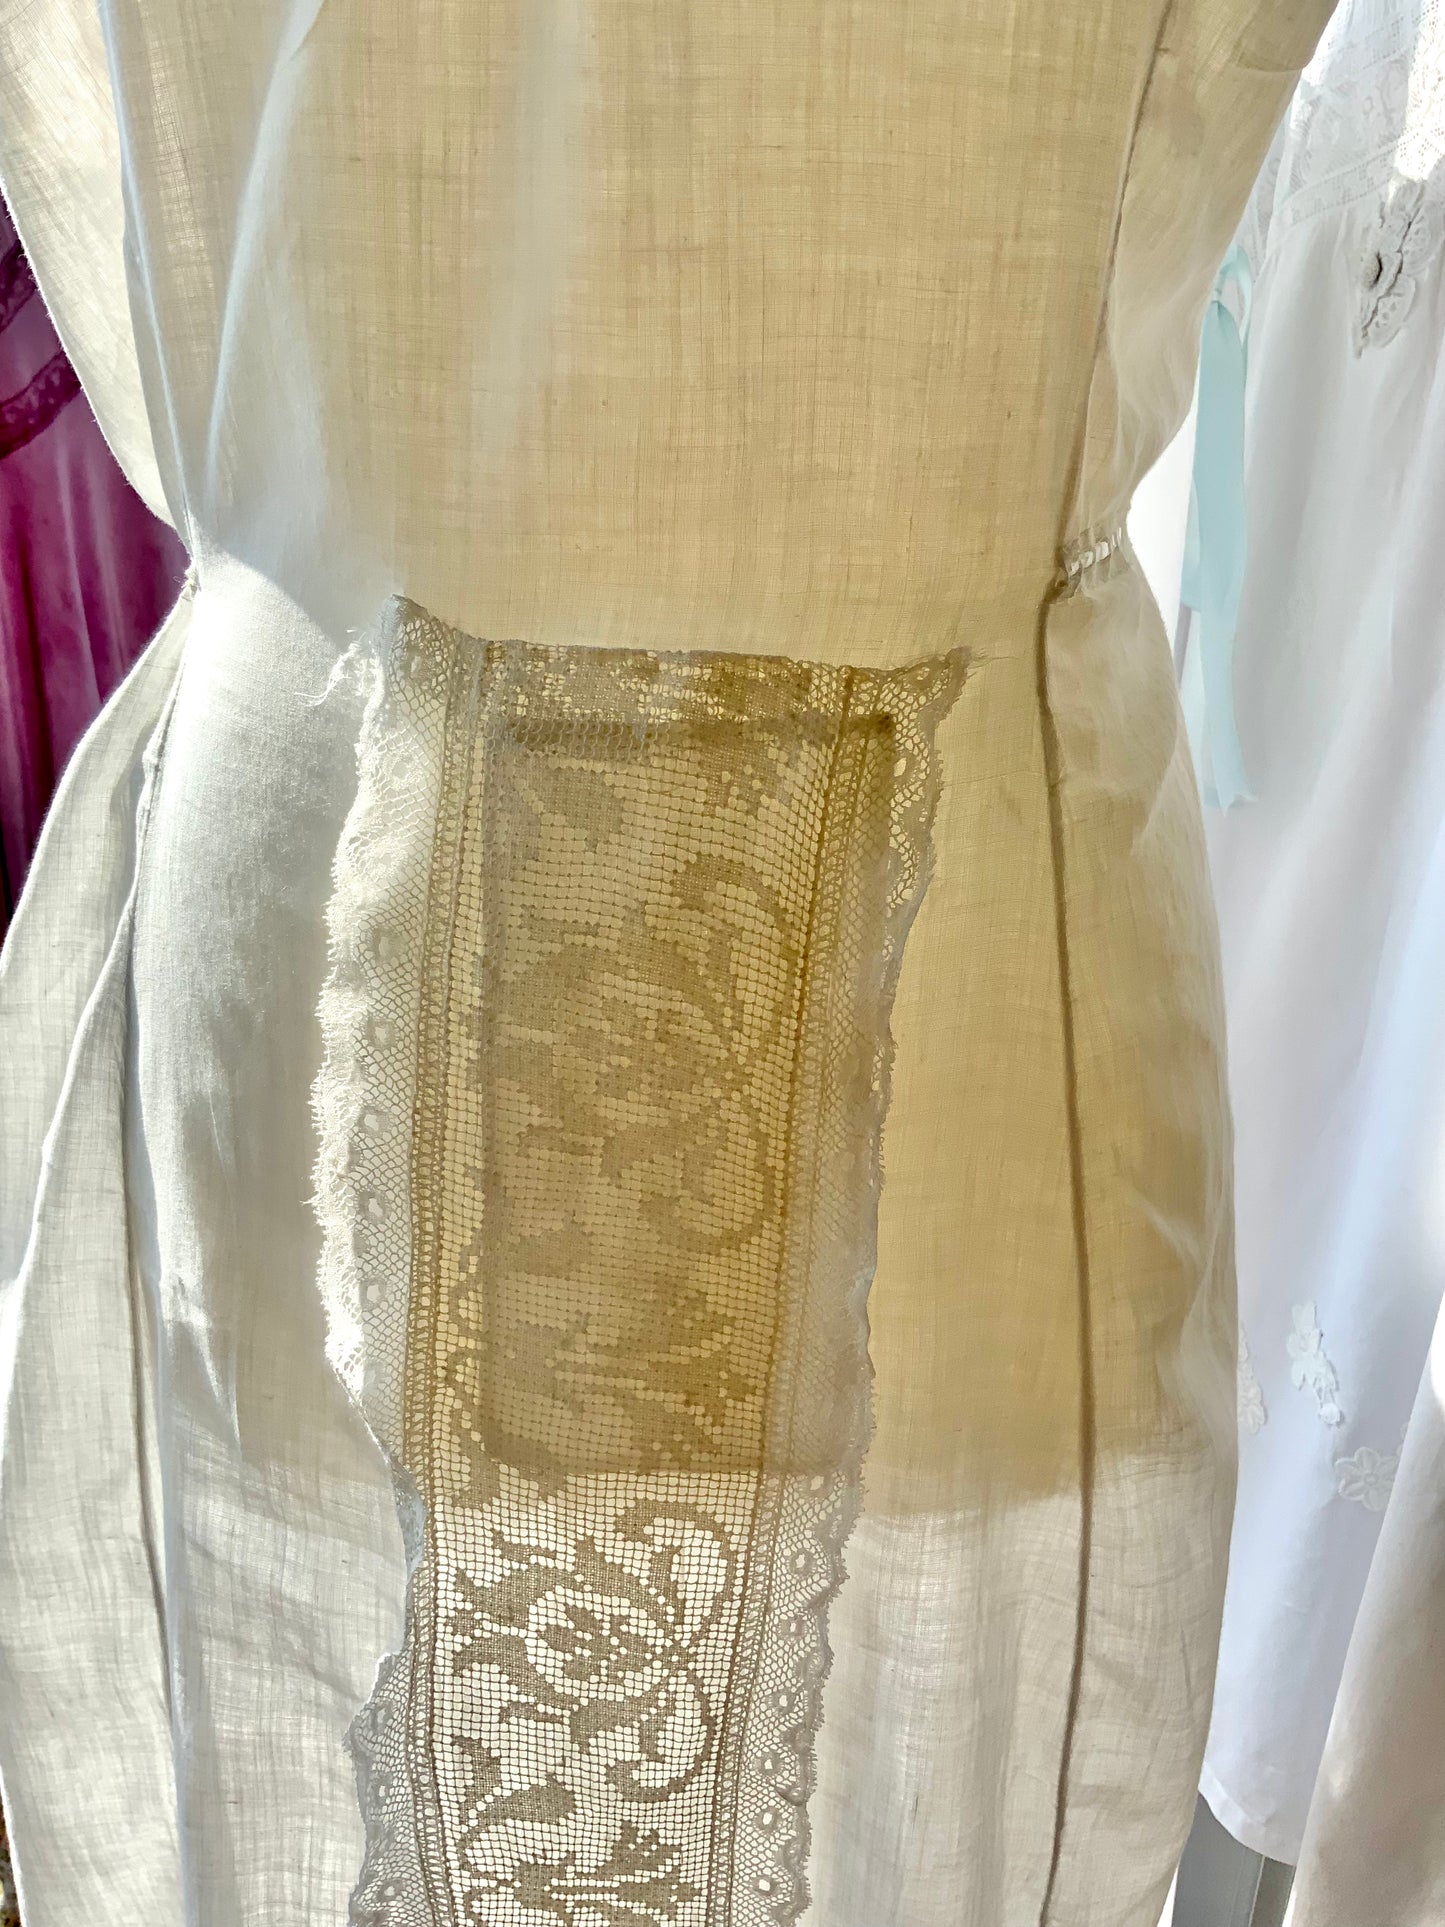 Edwardian Slip Dress / Nightgown - 1900